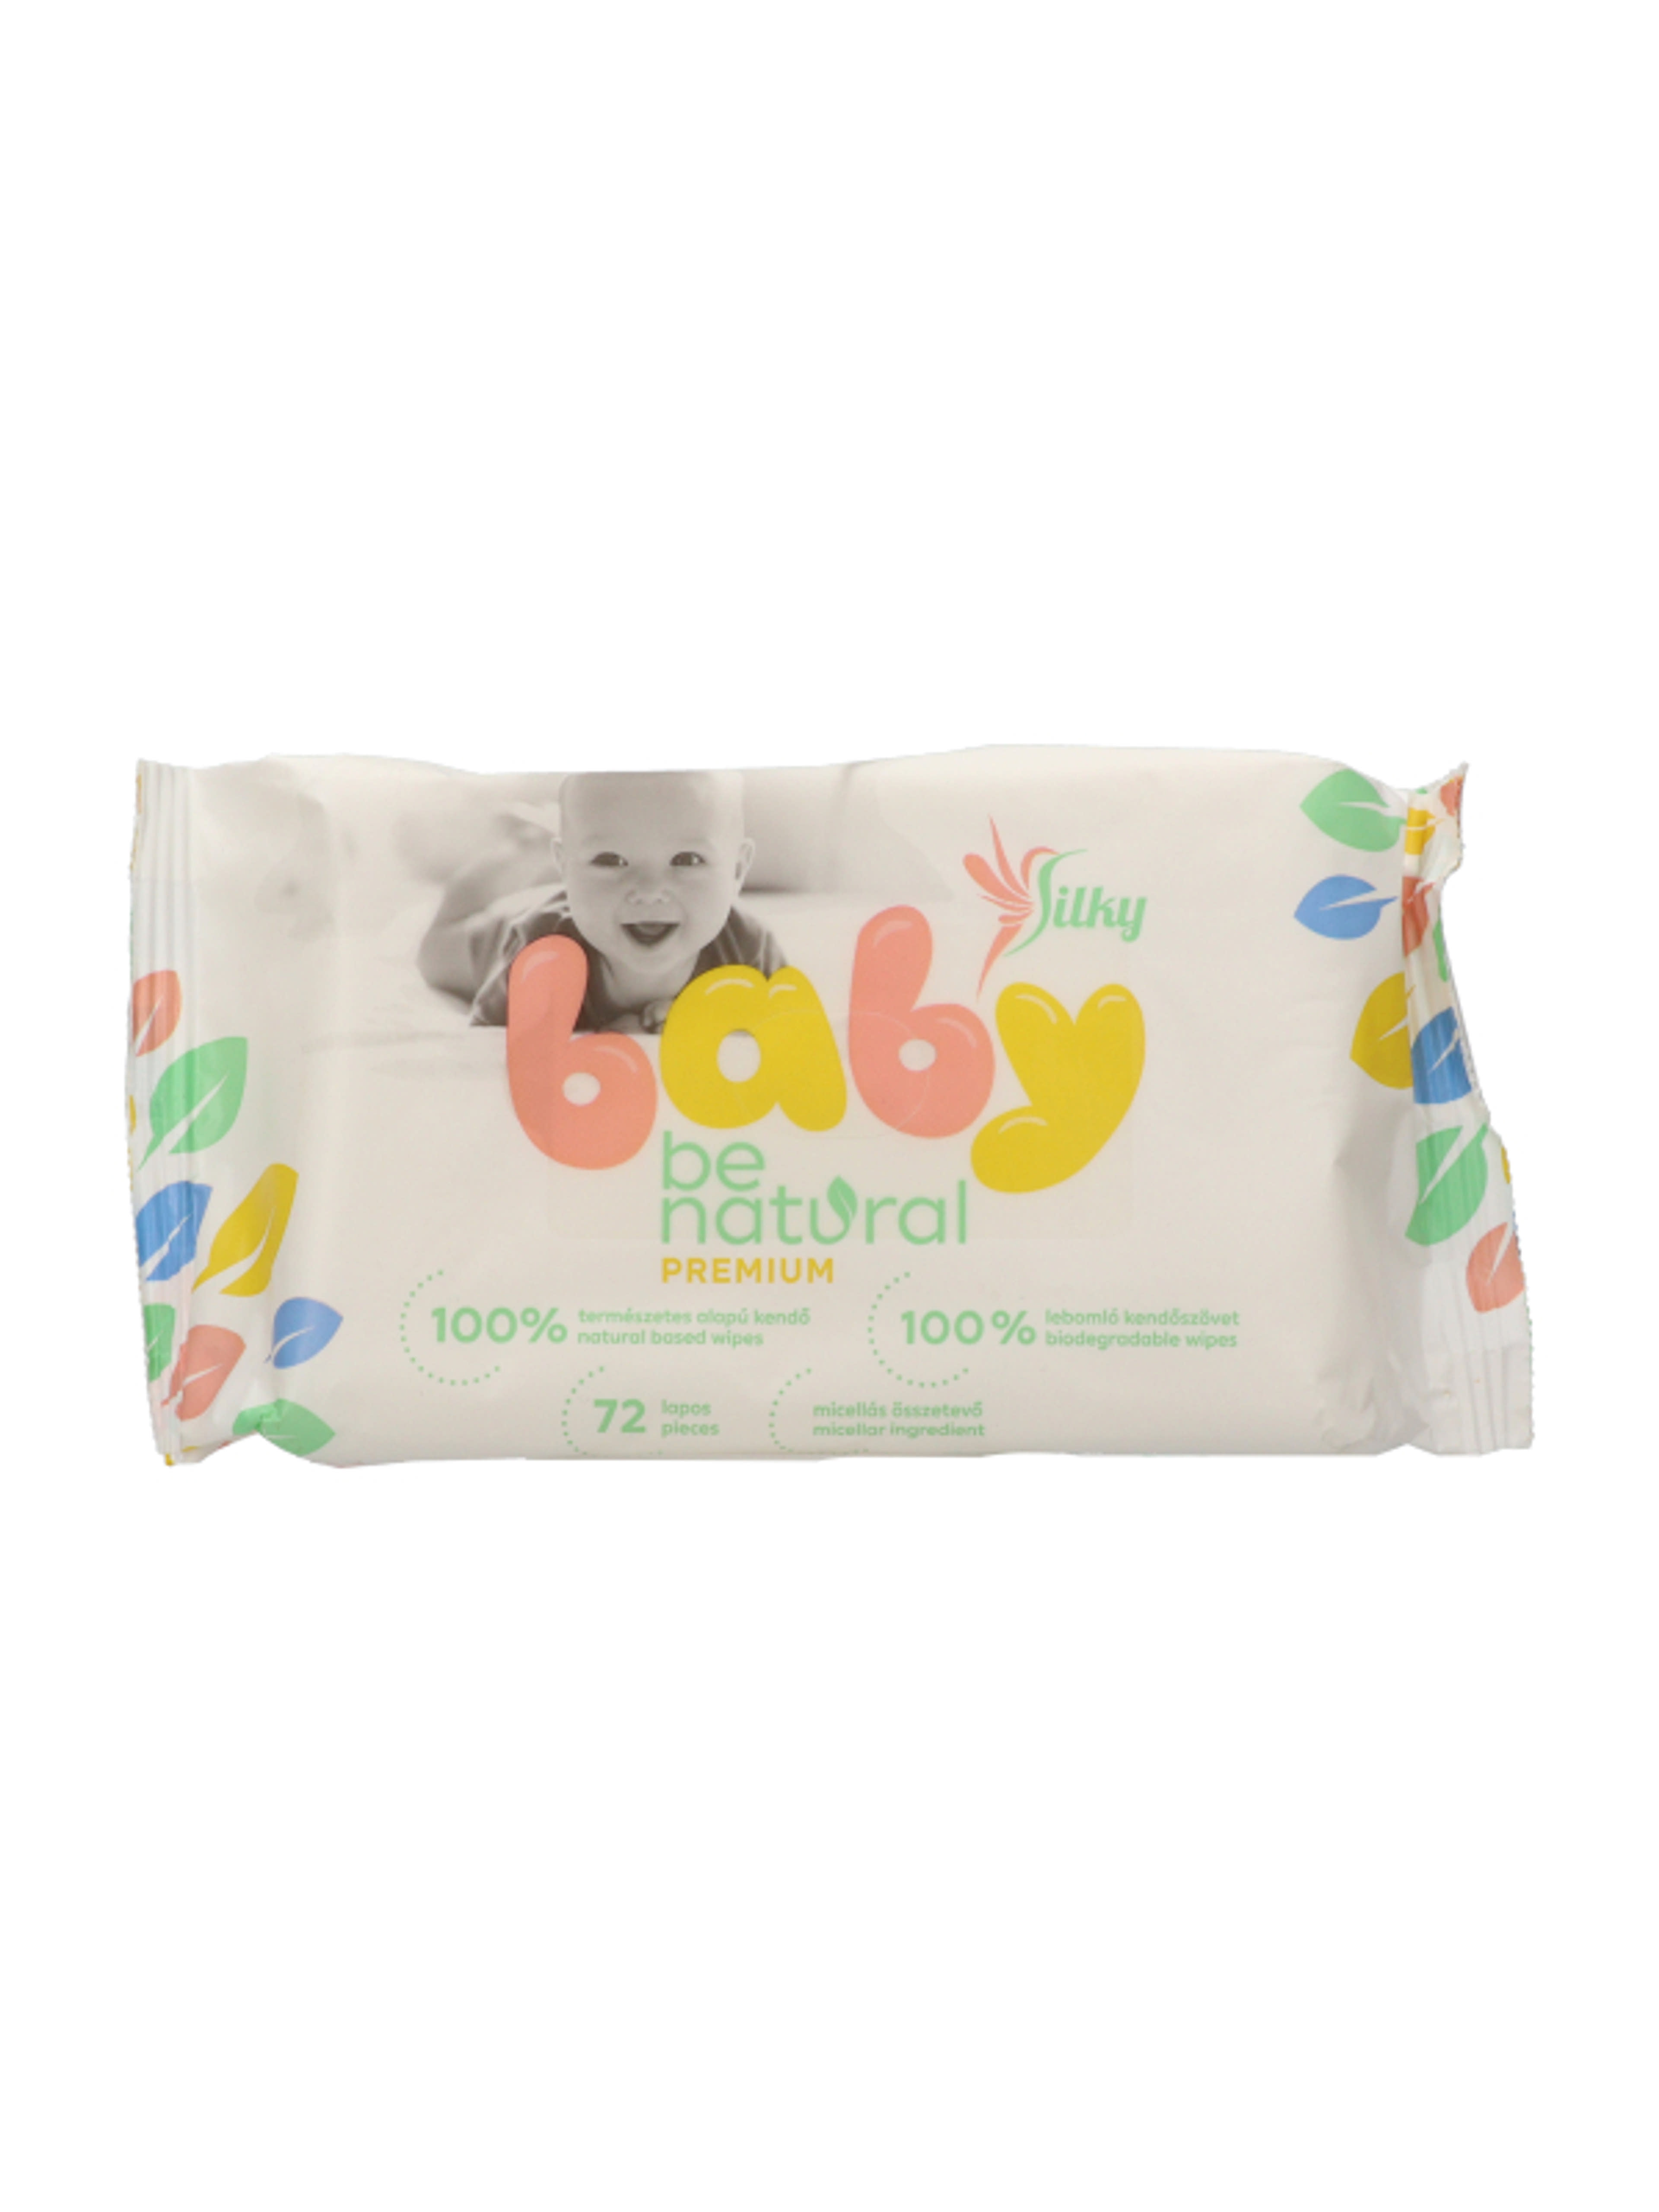 Silky baby be natural prémium törlőkendő - 72 db-2